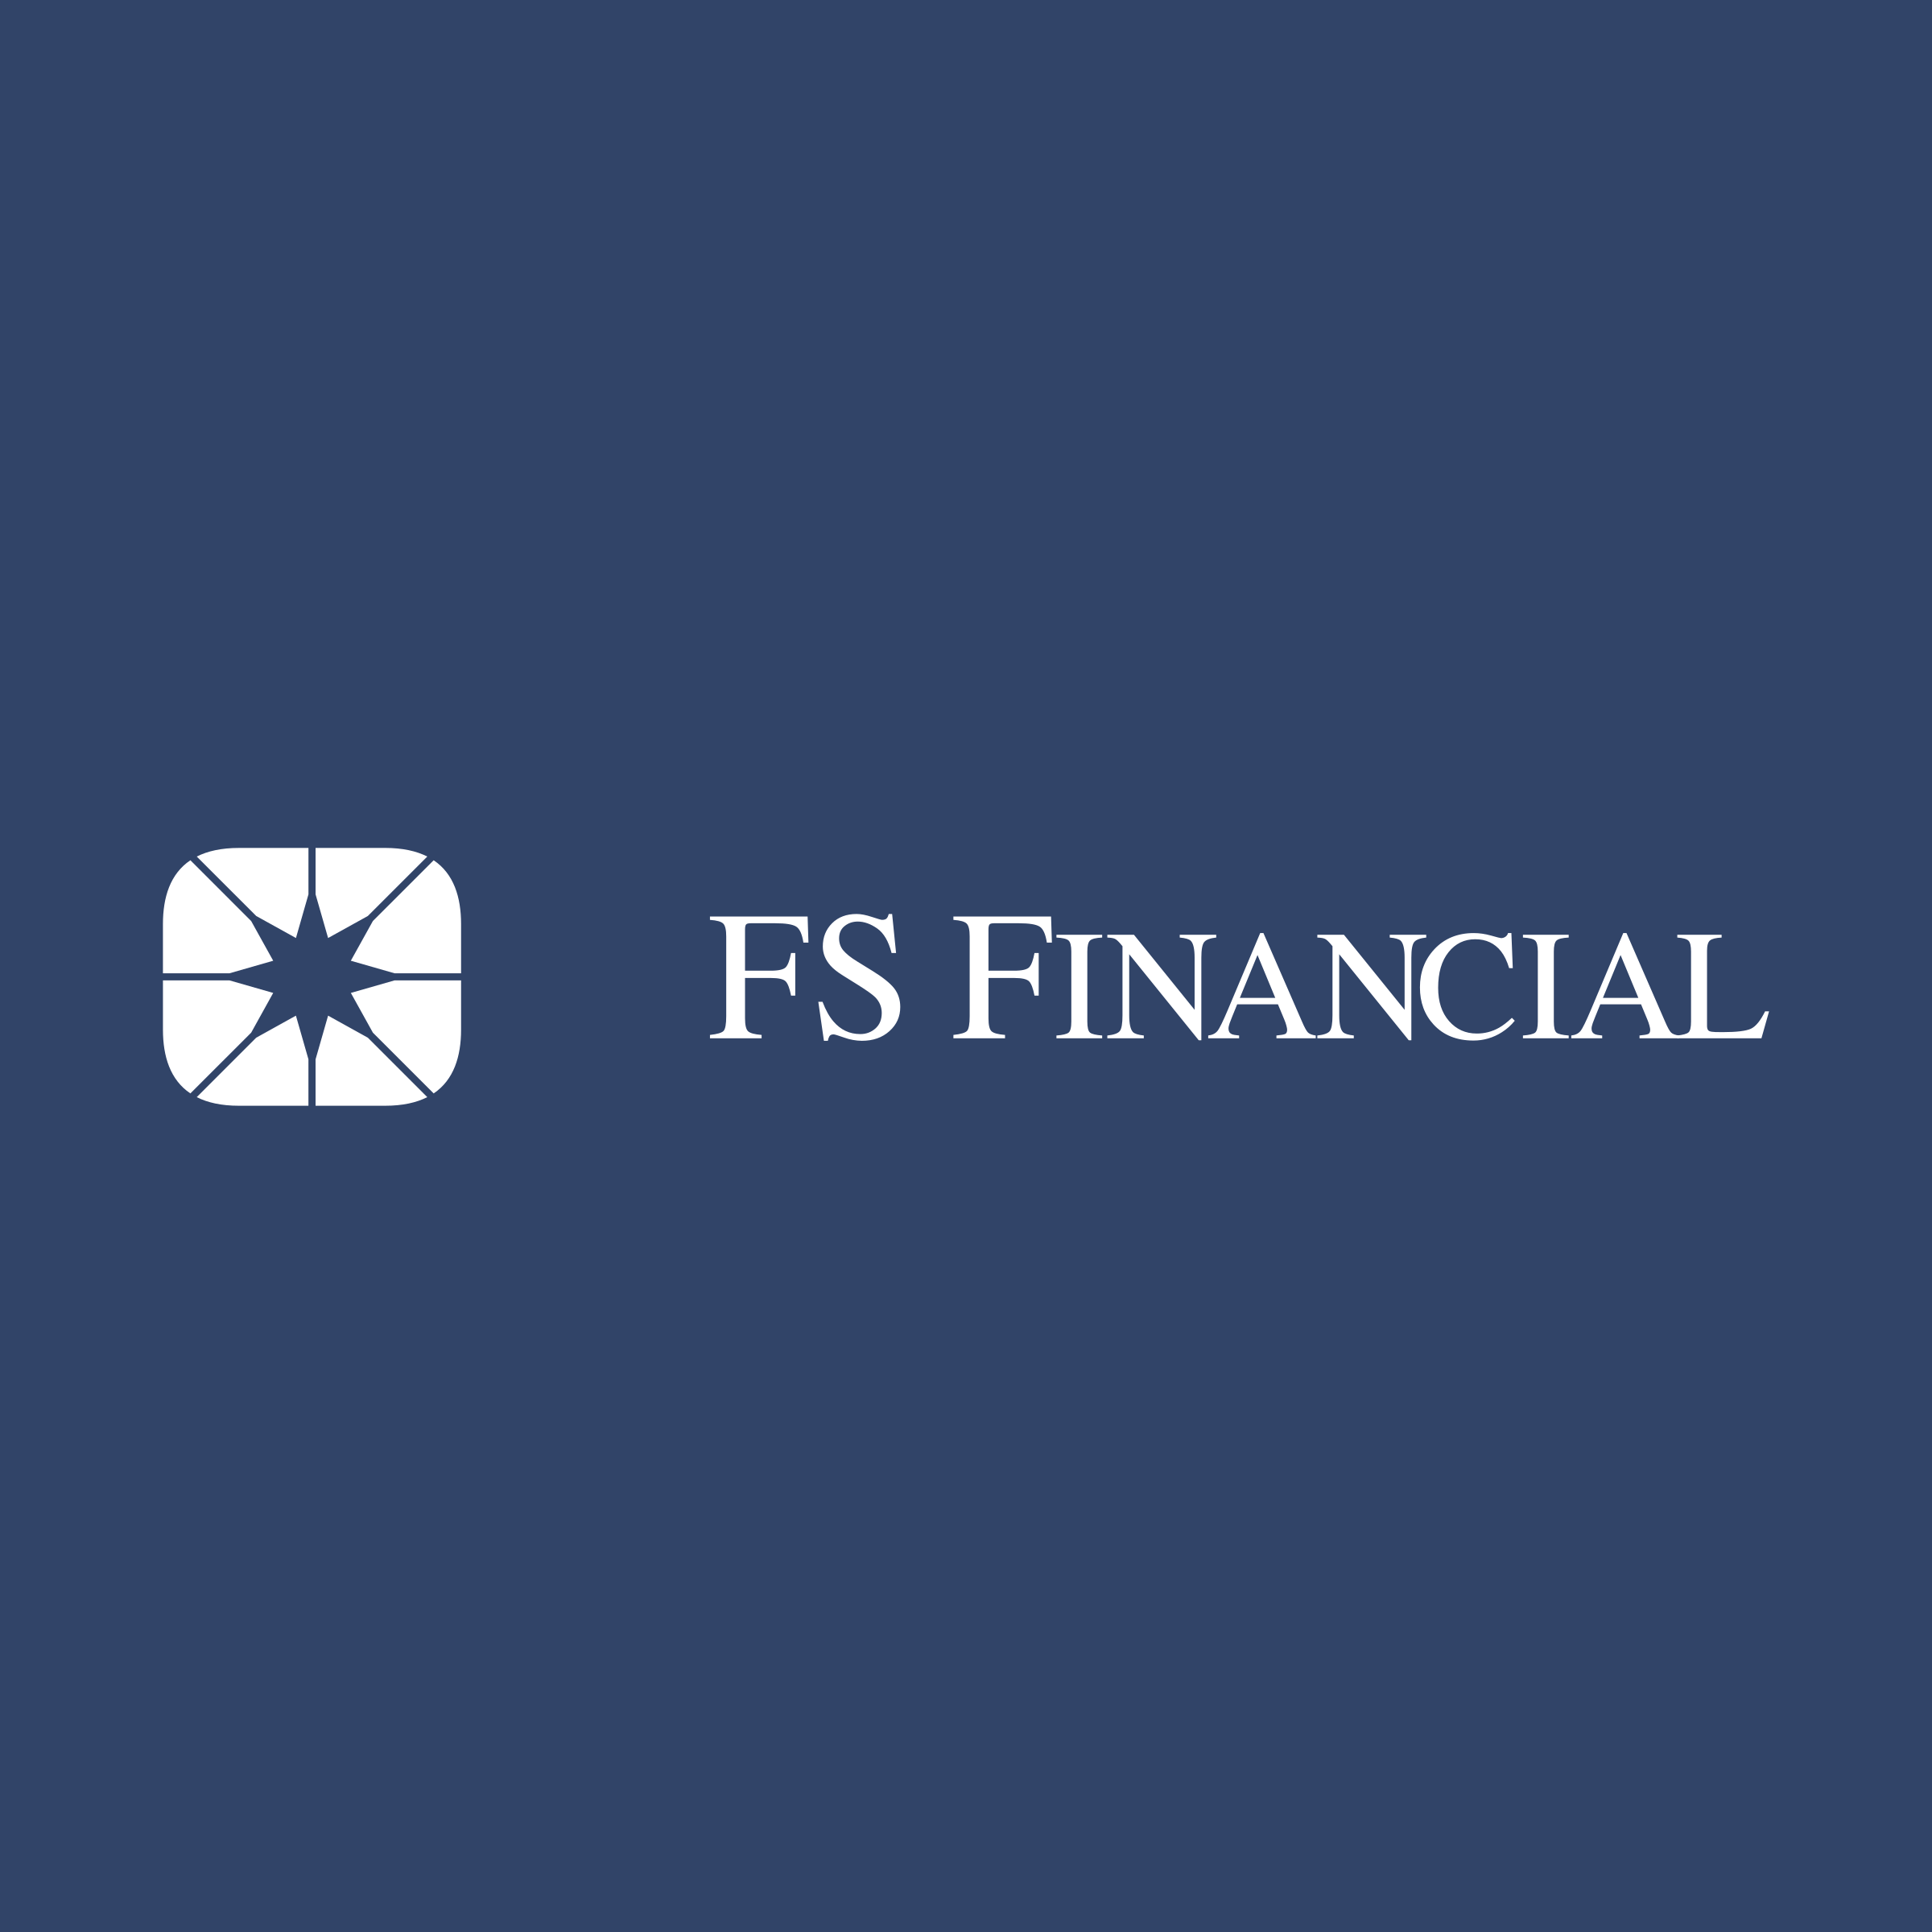 WFS Logo - WFS Financial Logo PNG Transparent & SVG Vector